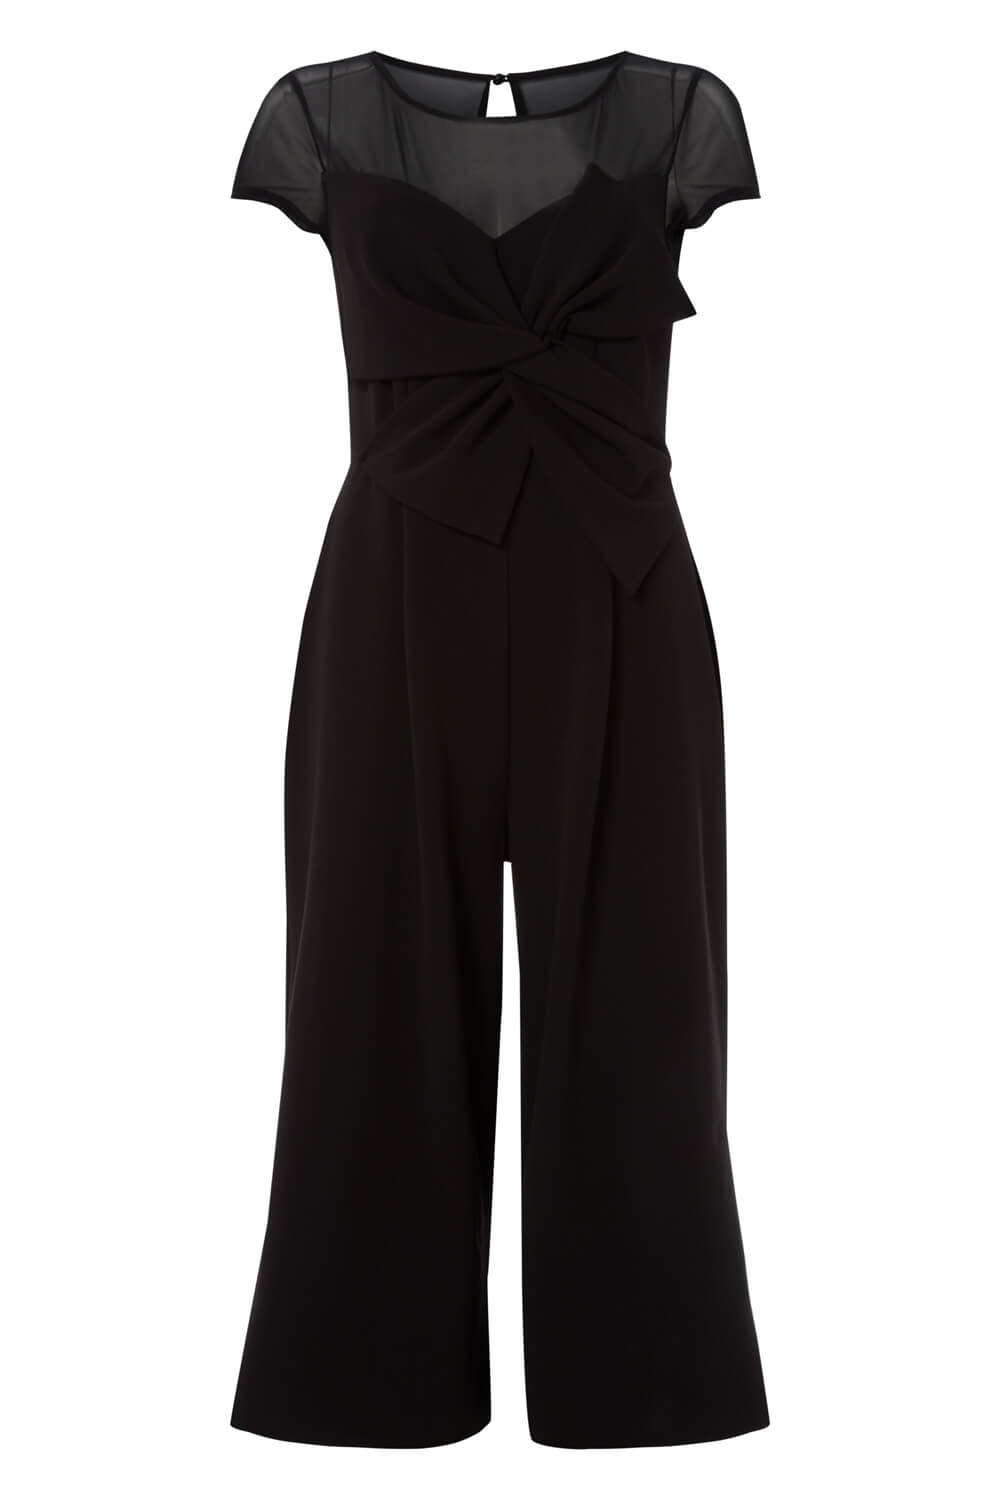 Black Bow Culotte Jumpsuit in Black - Roman Originals UK